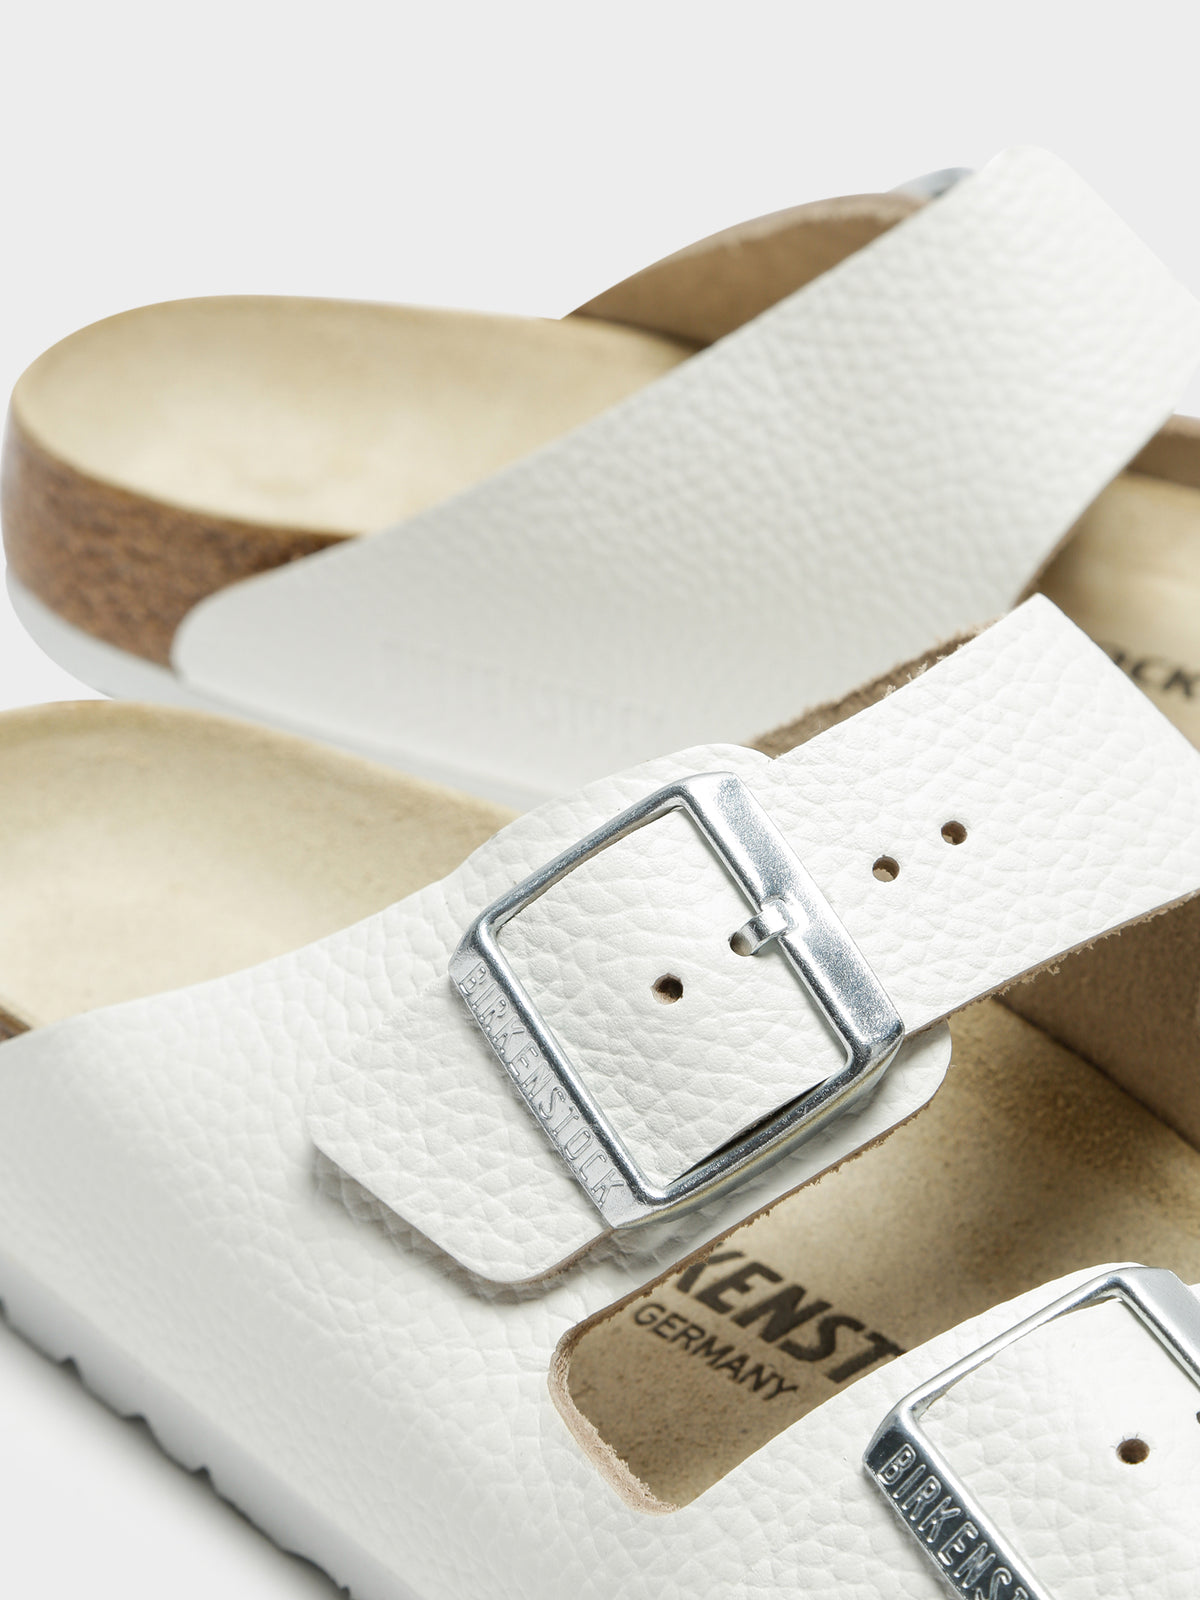 Unisex Arizona Sandals in White